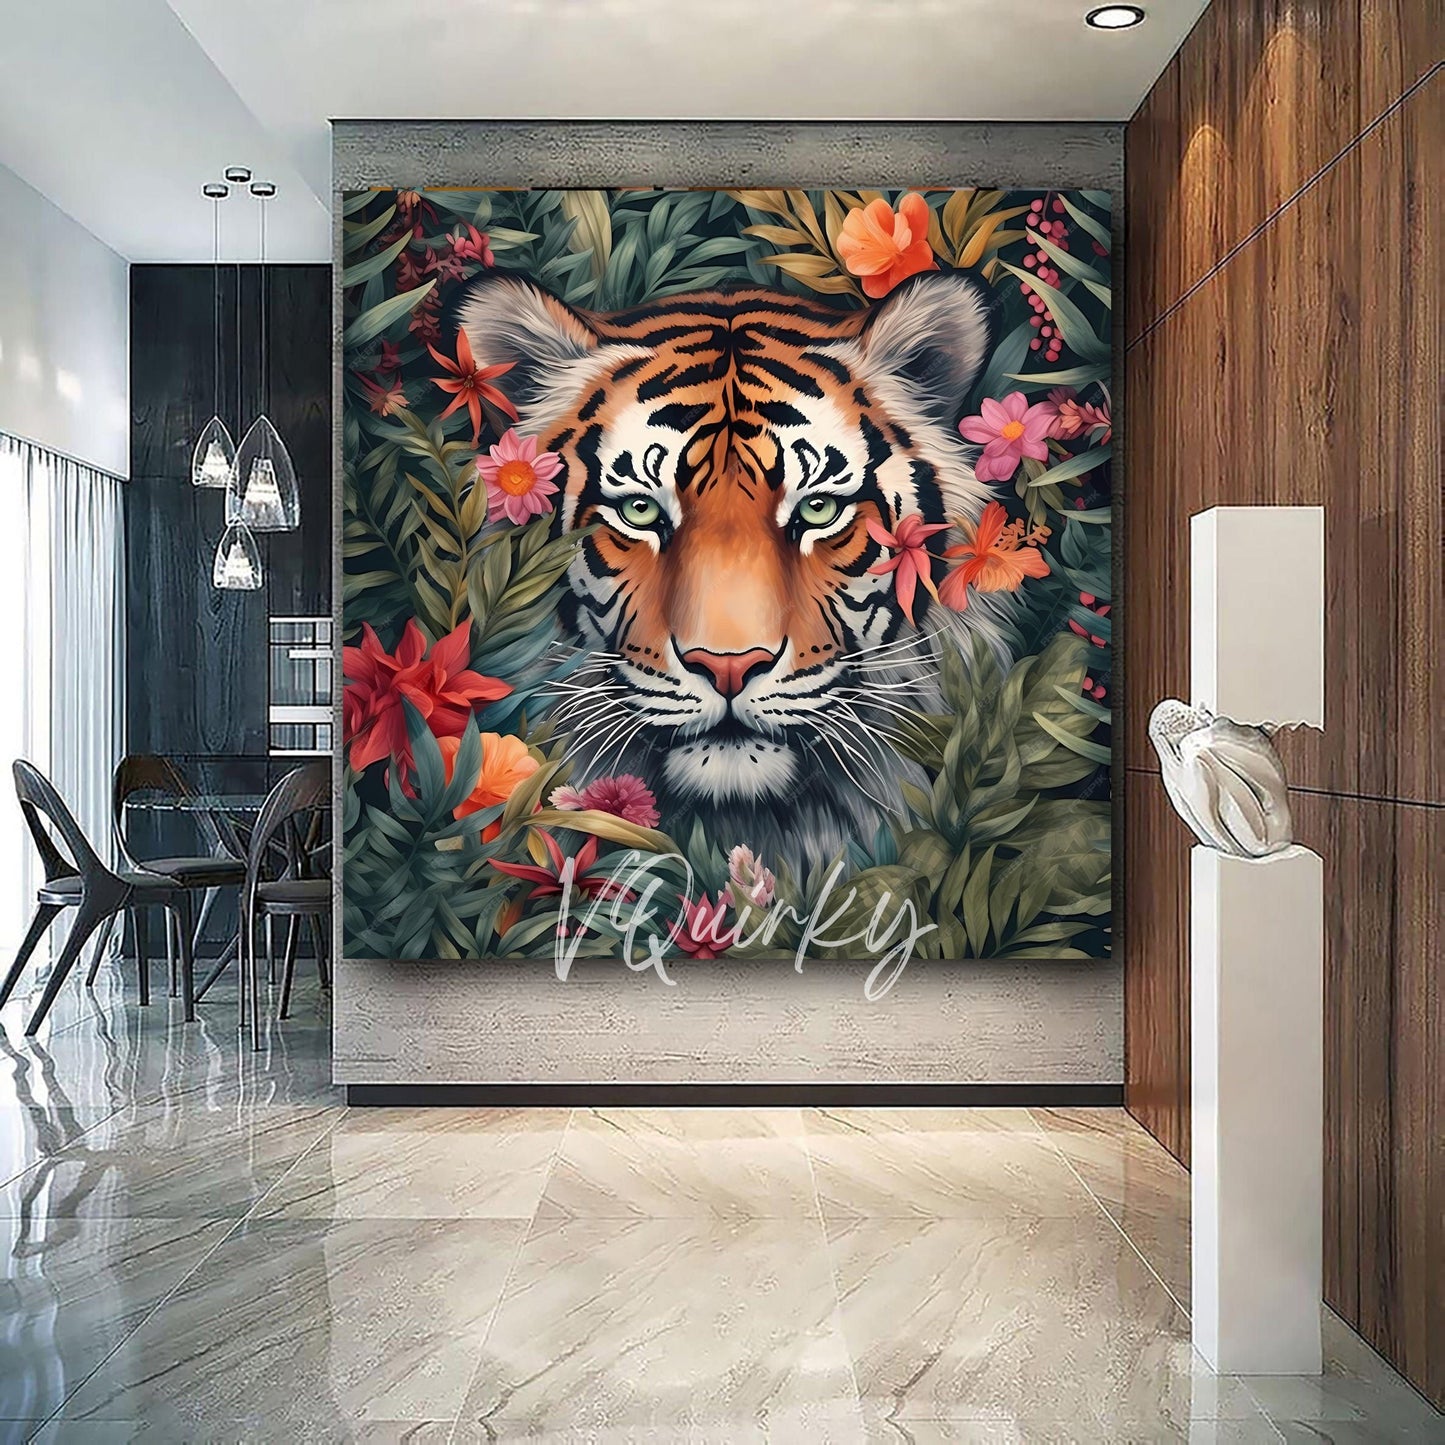 Hustling Tiger Canvas Painting